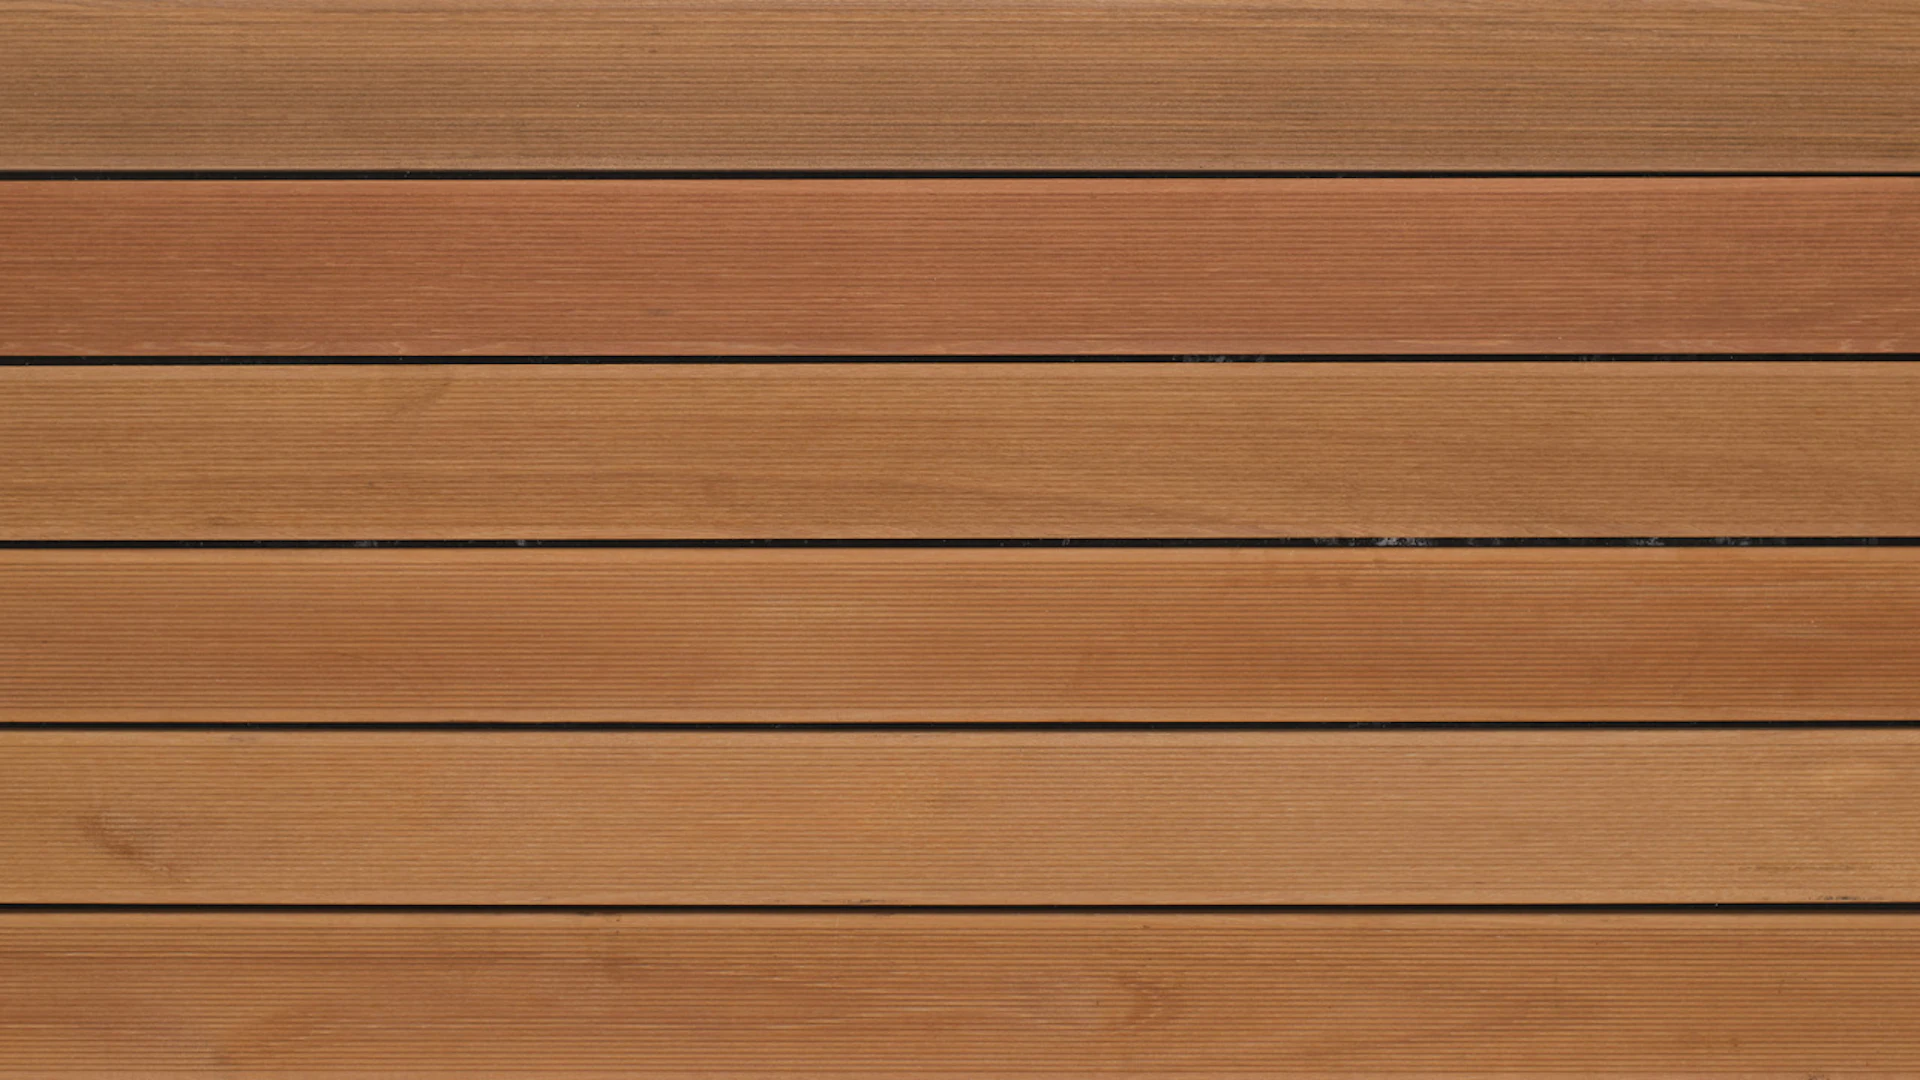 TerraWood terrasse bois - Bangkirai 25 x 145mm rainuré/rainuré